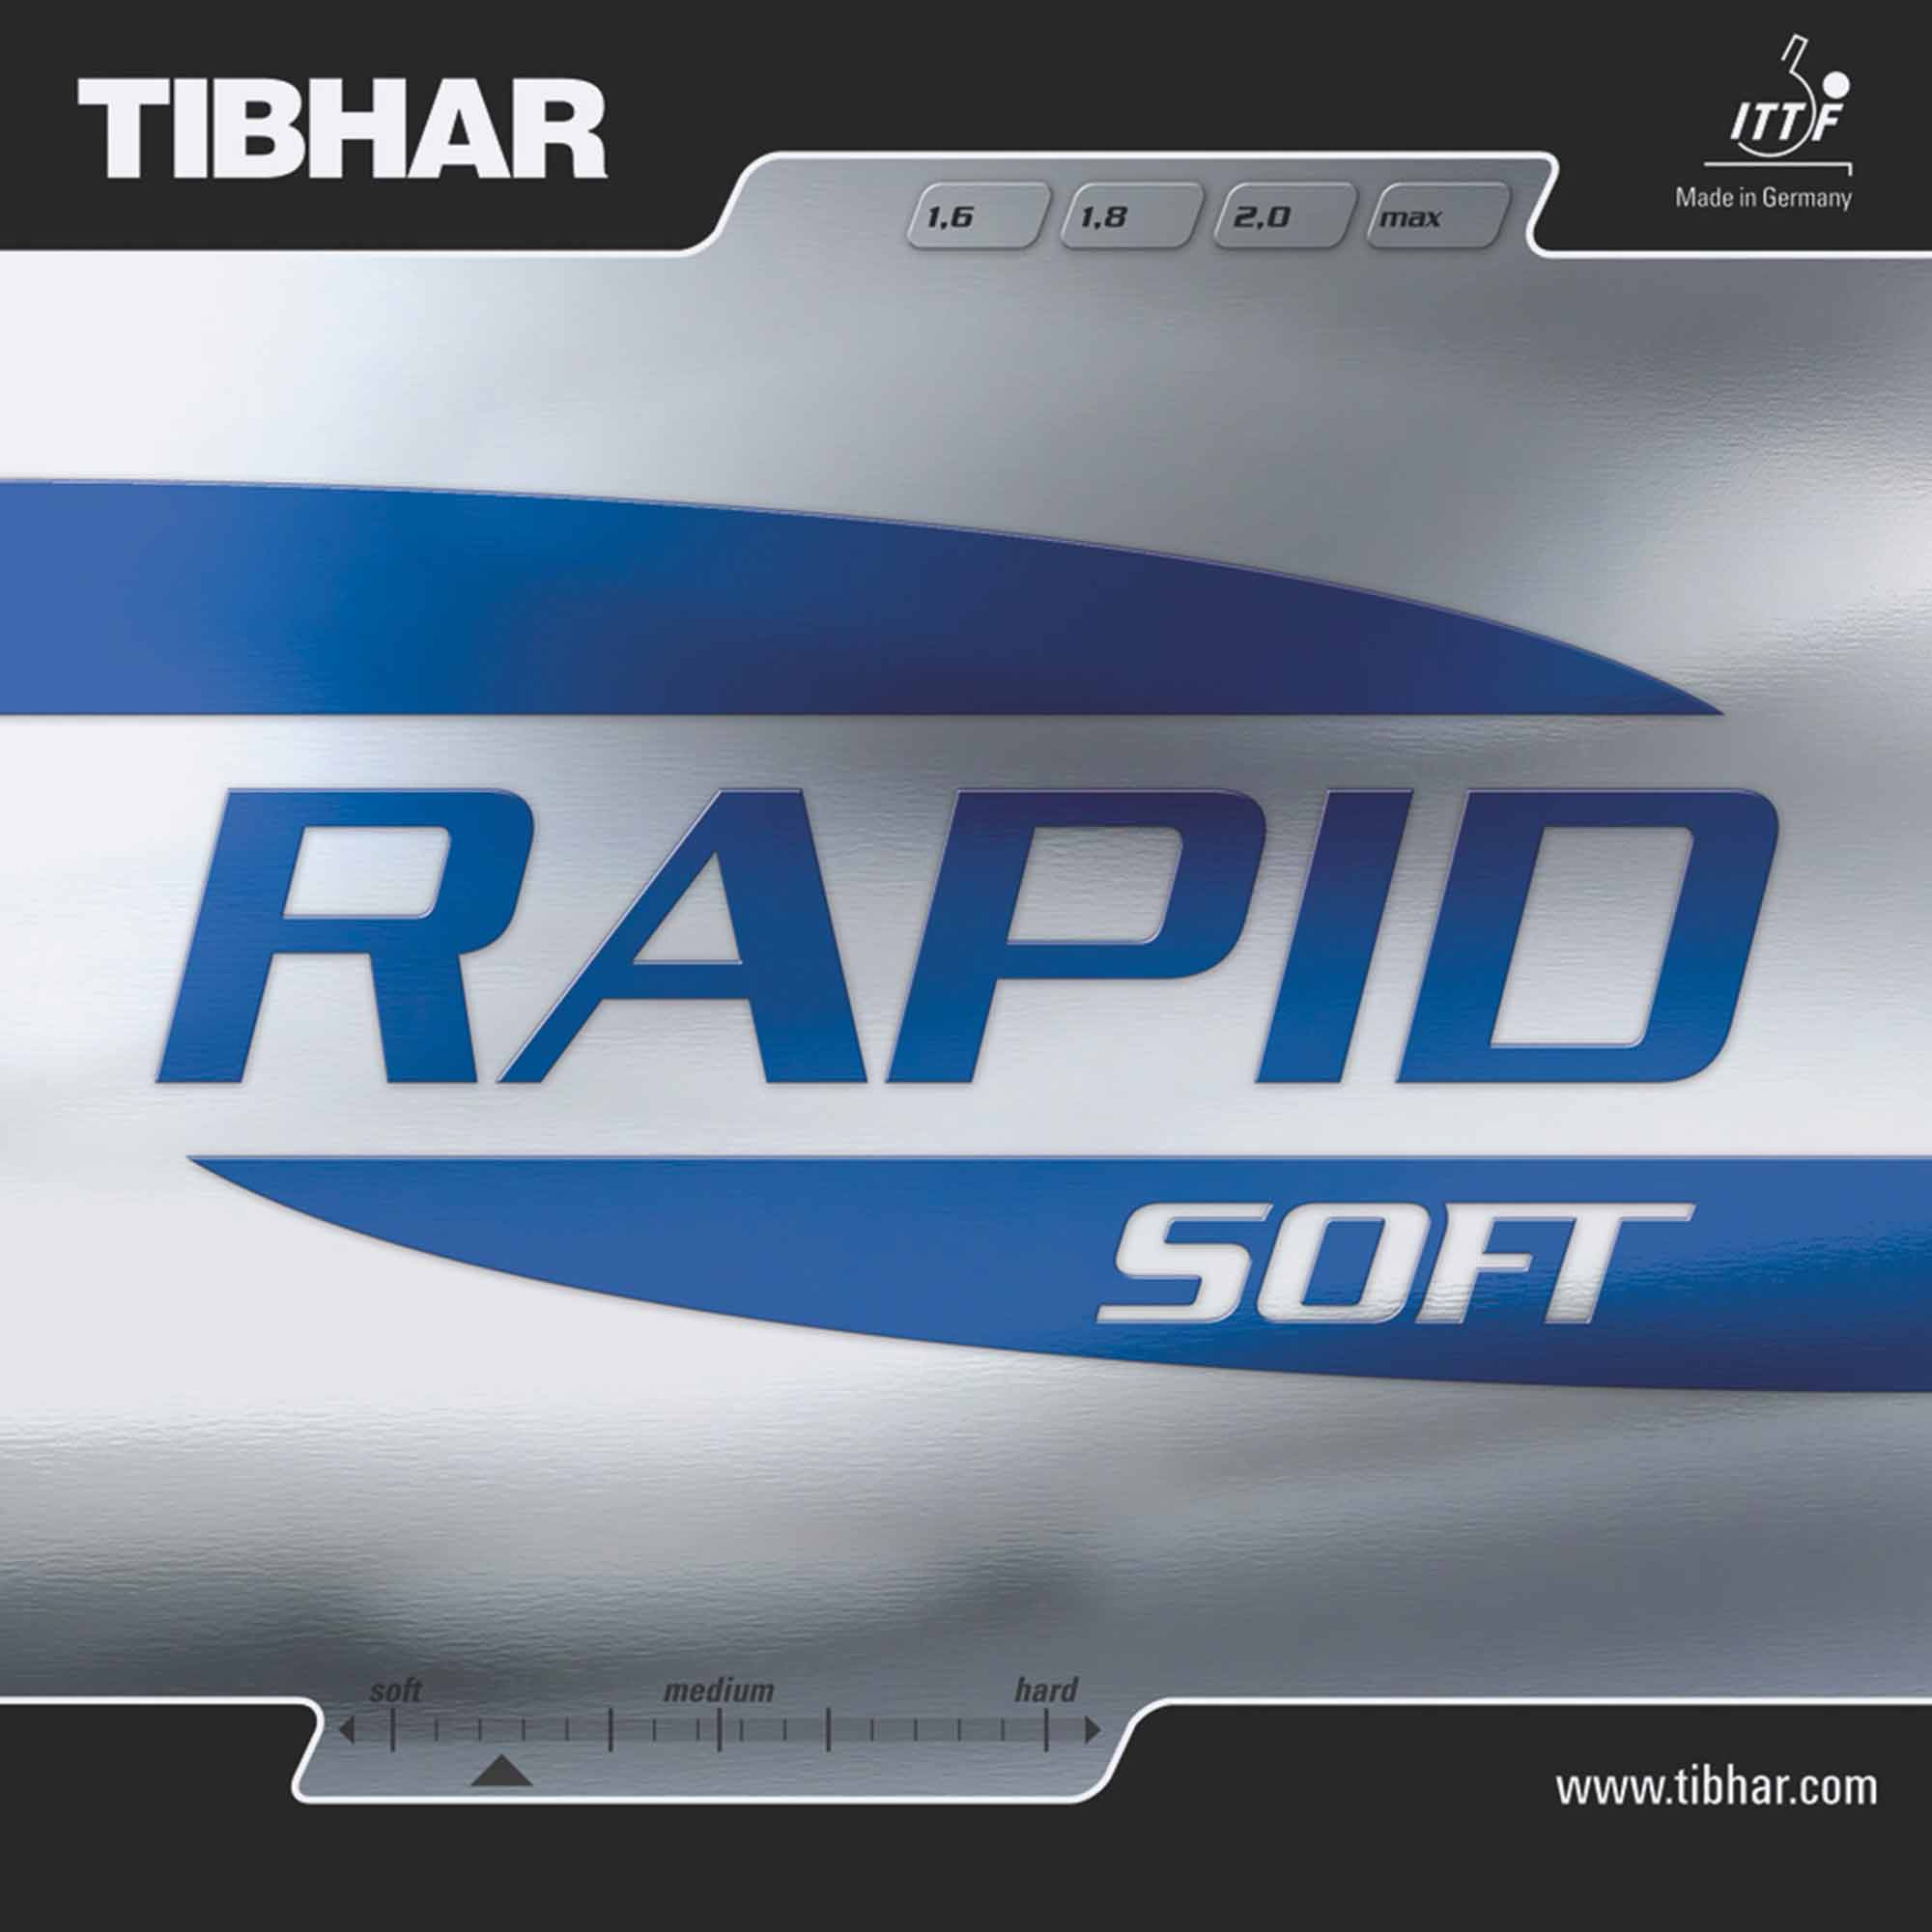 Tibhar Rubber Rapid Soft